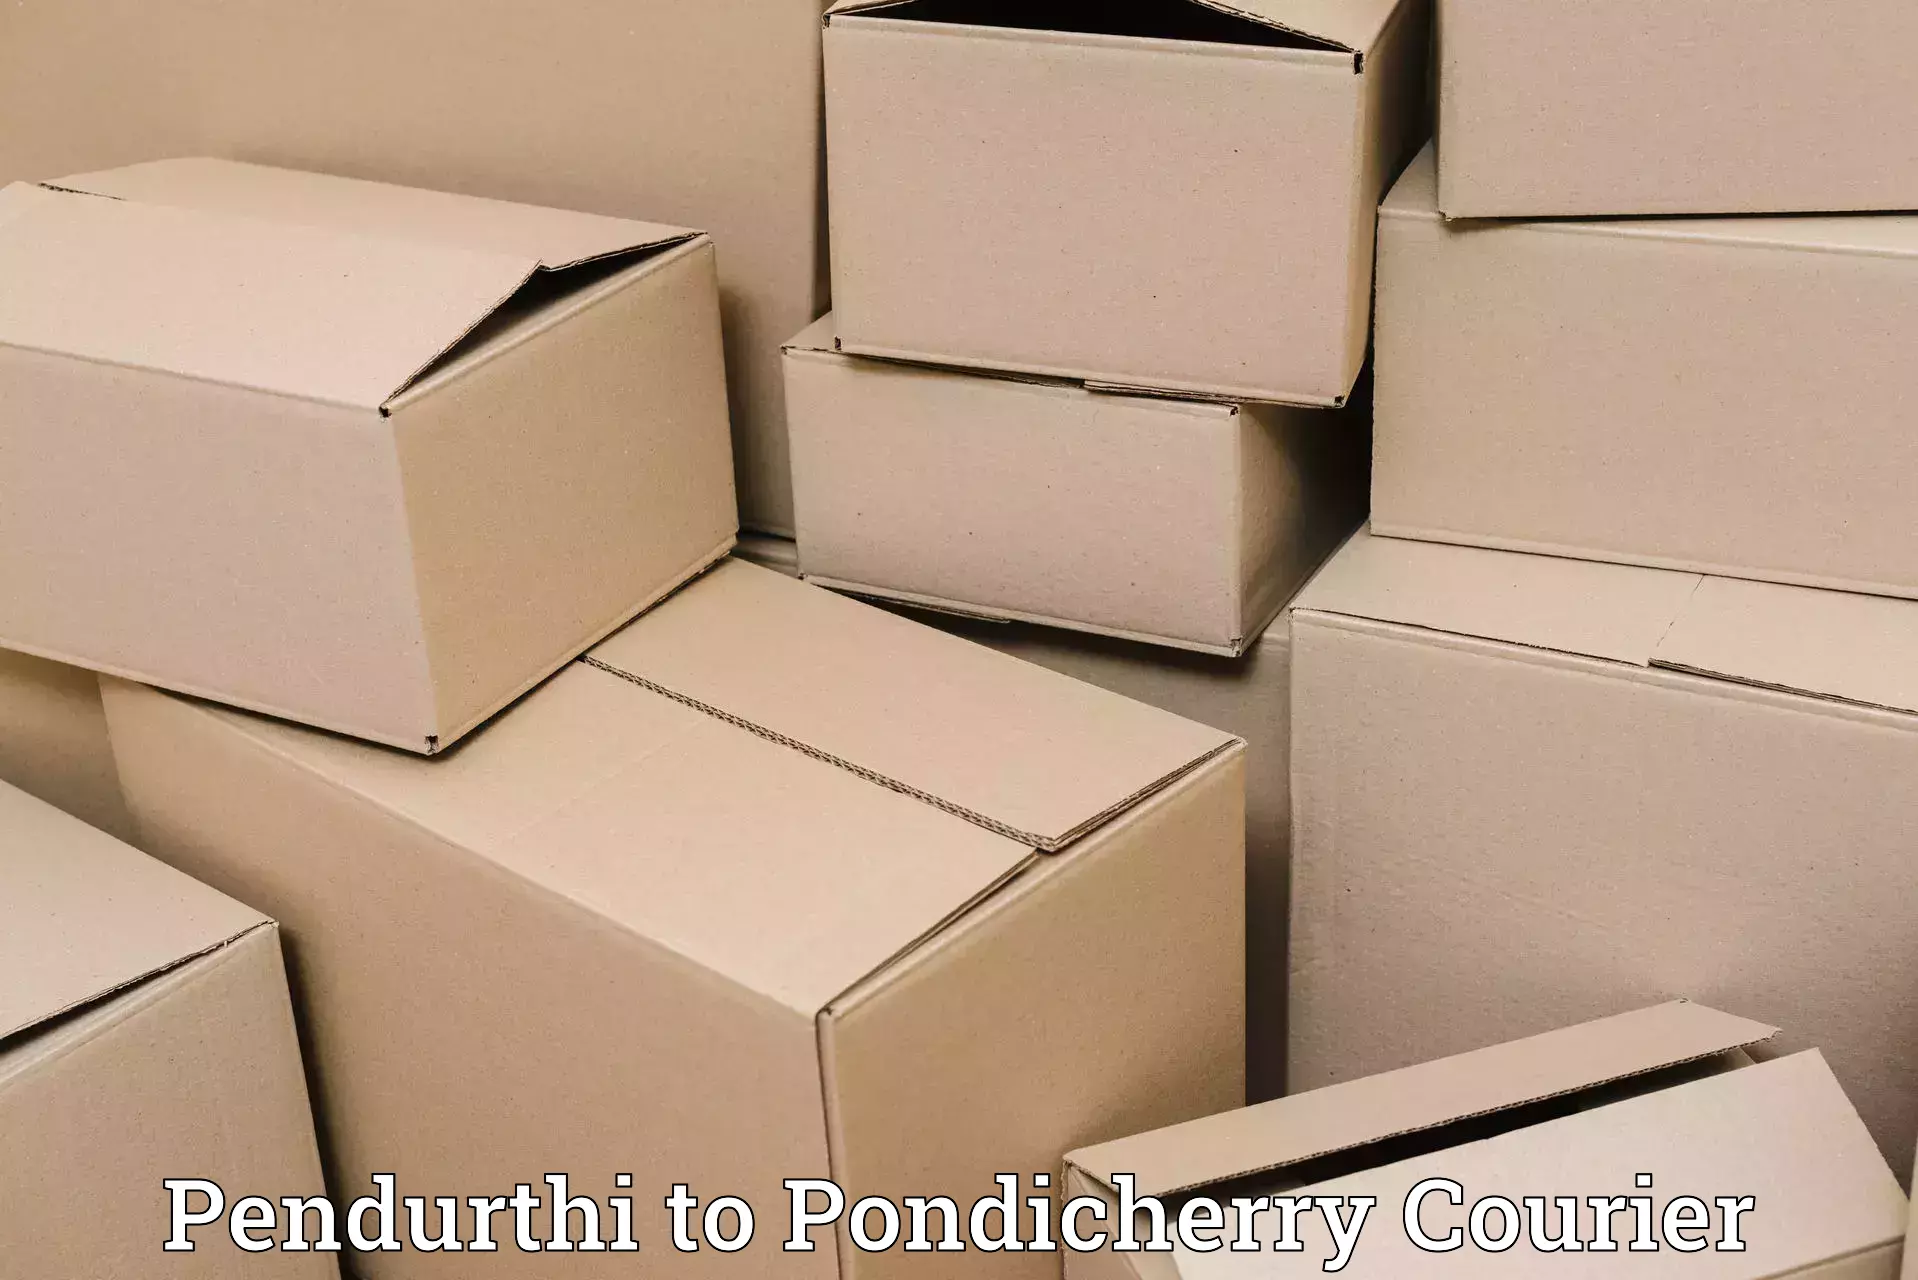 Cash on delivery service Pendurthi to Pondicherry